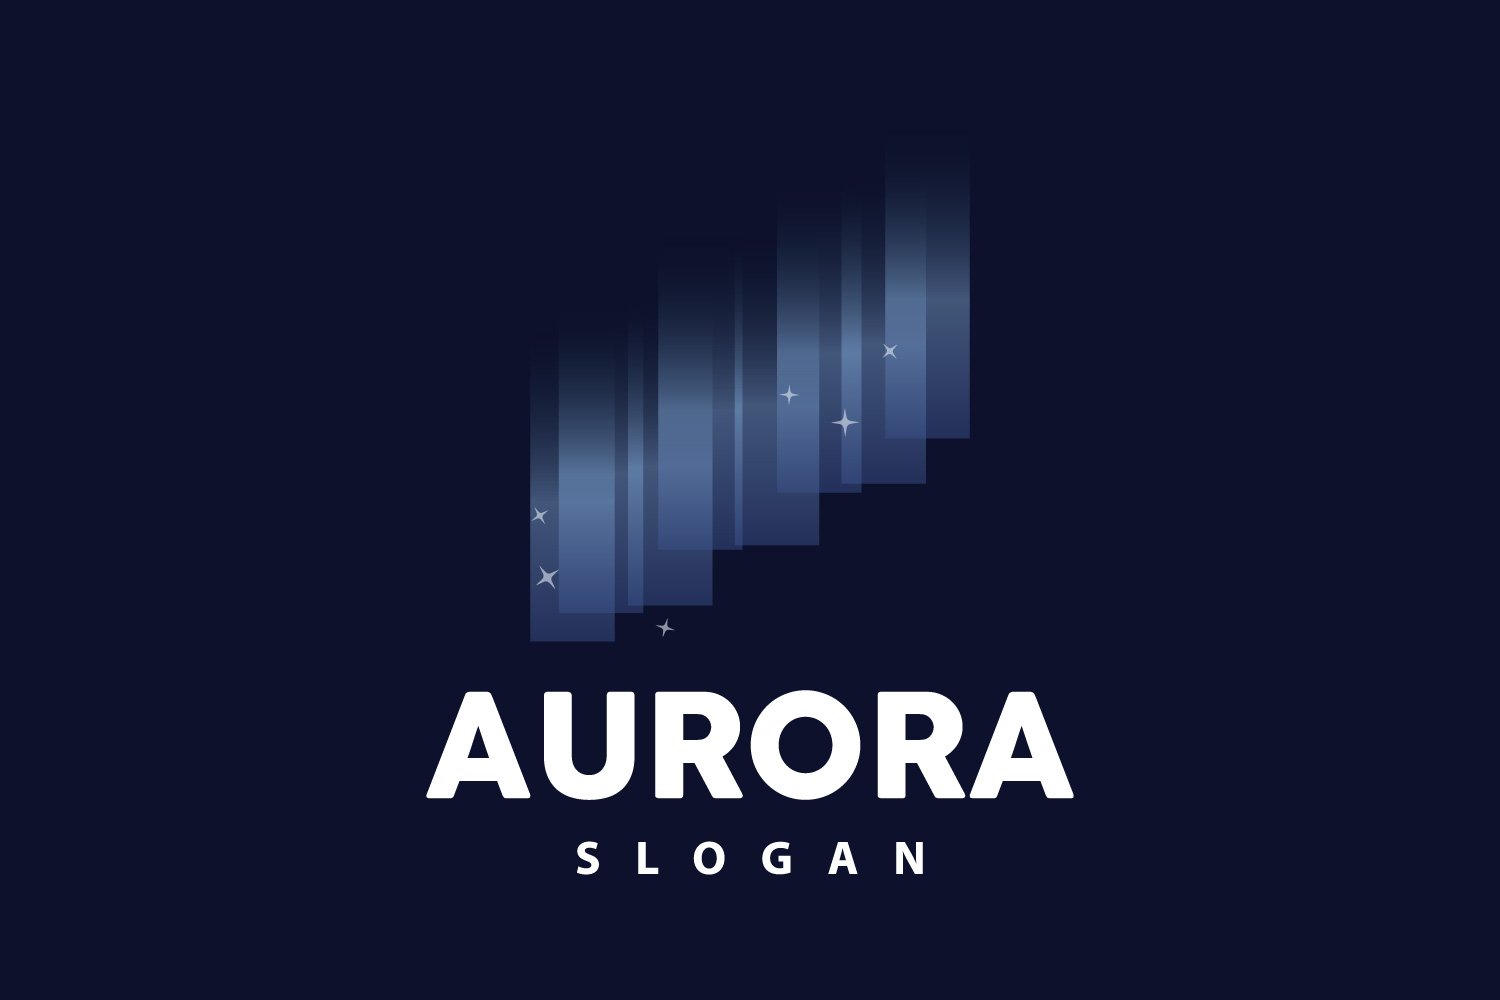 Aurora Light Wave Sky View LogoV11